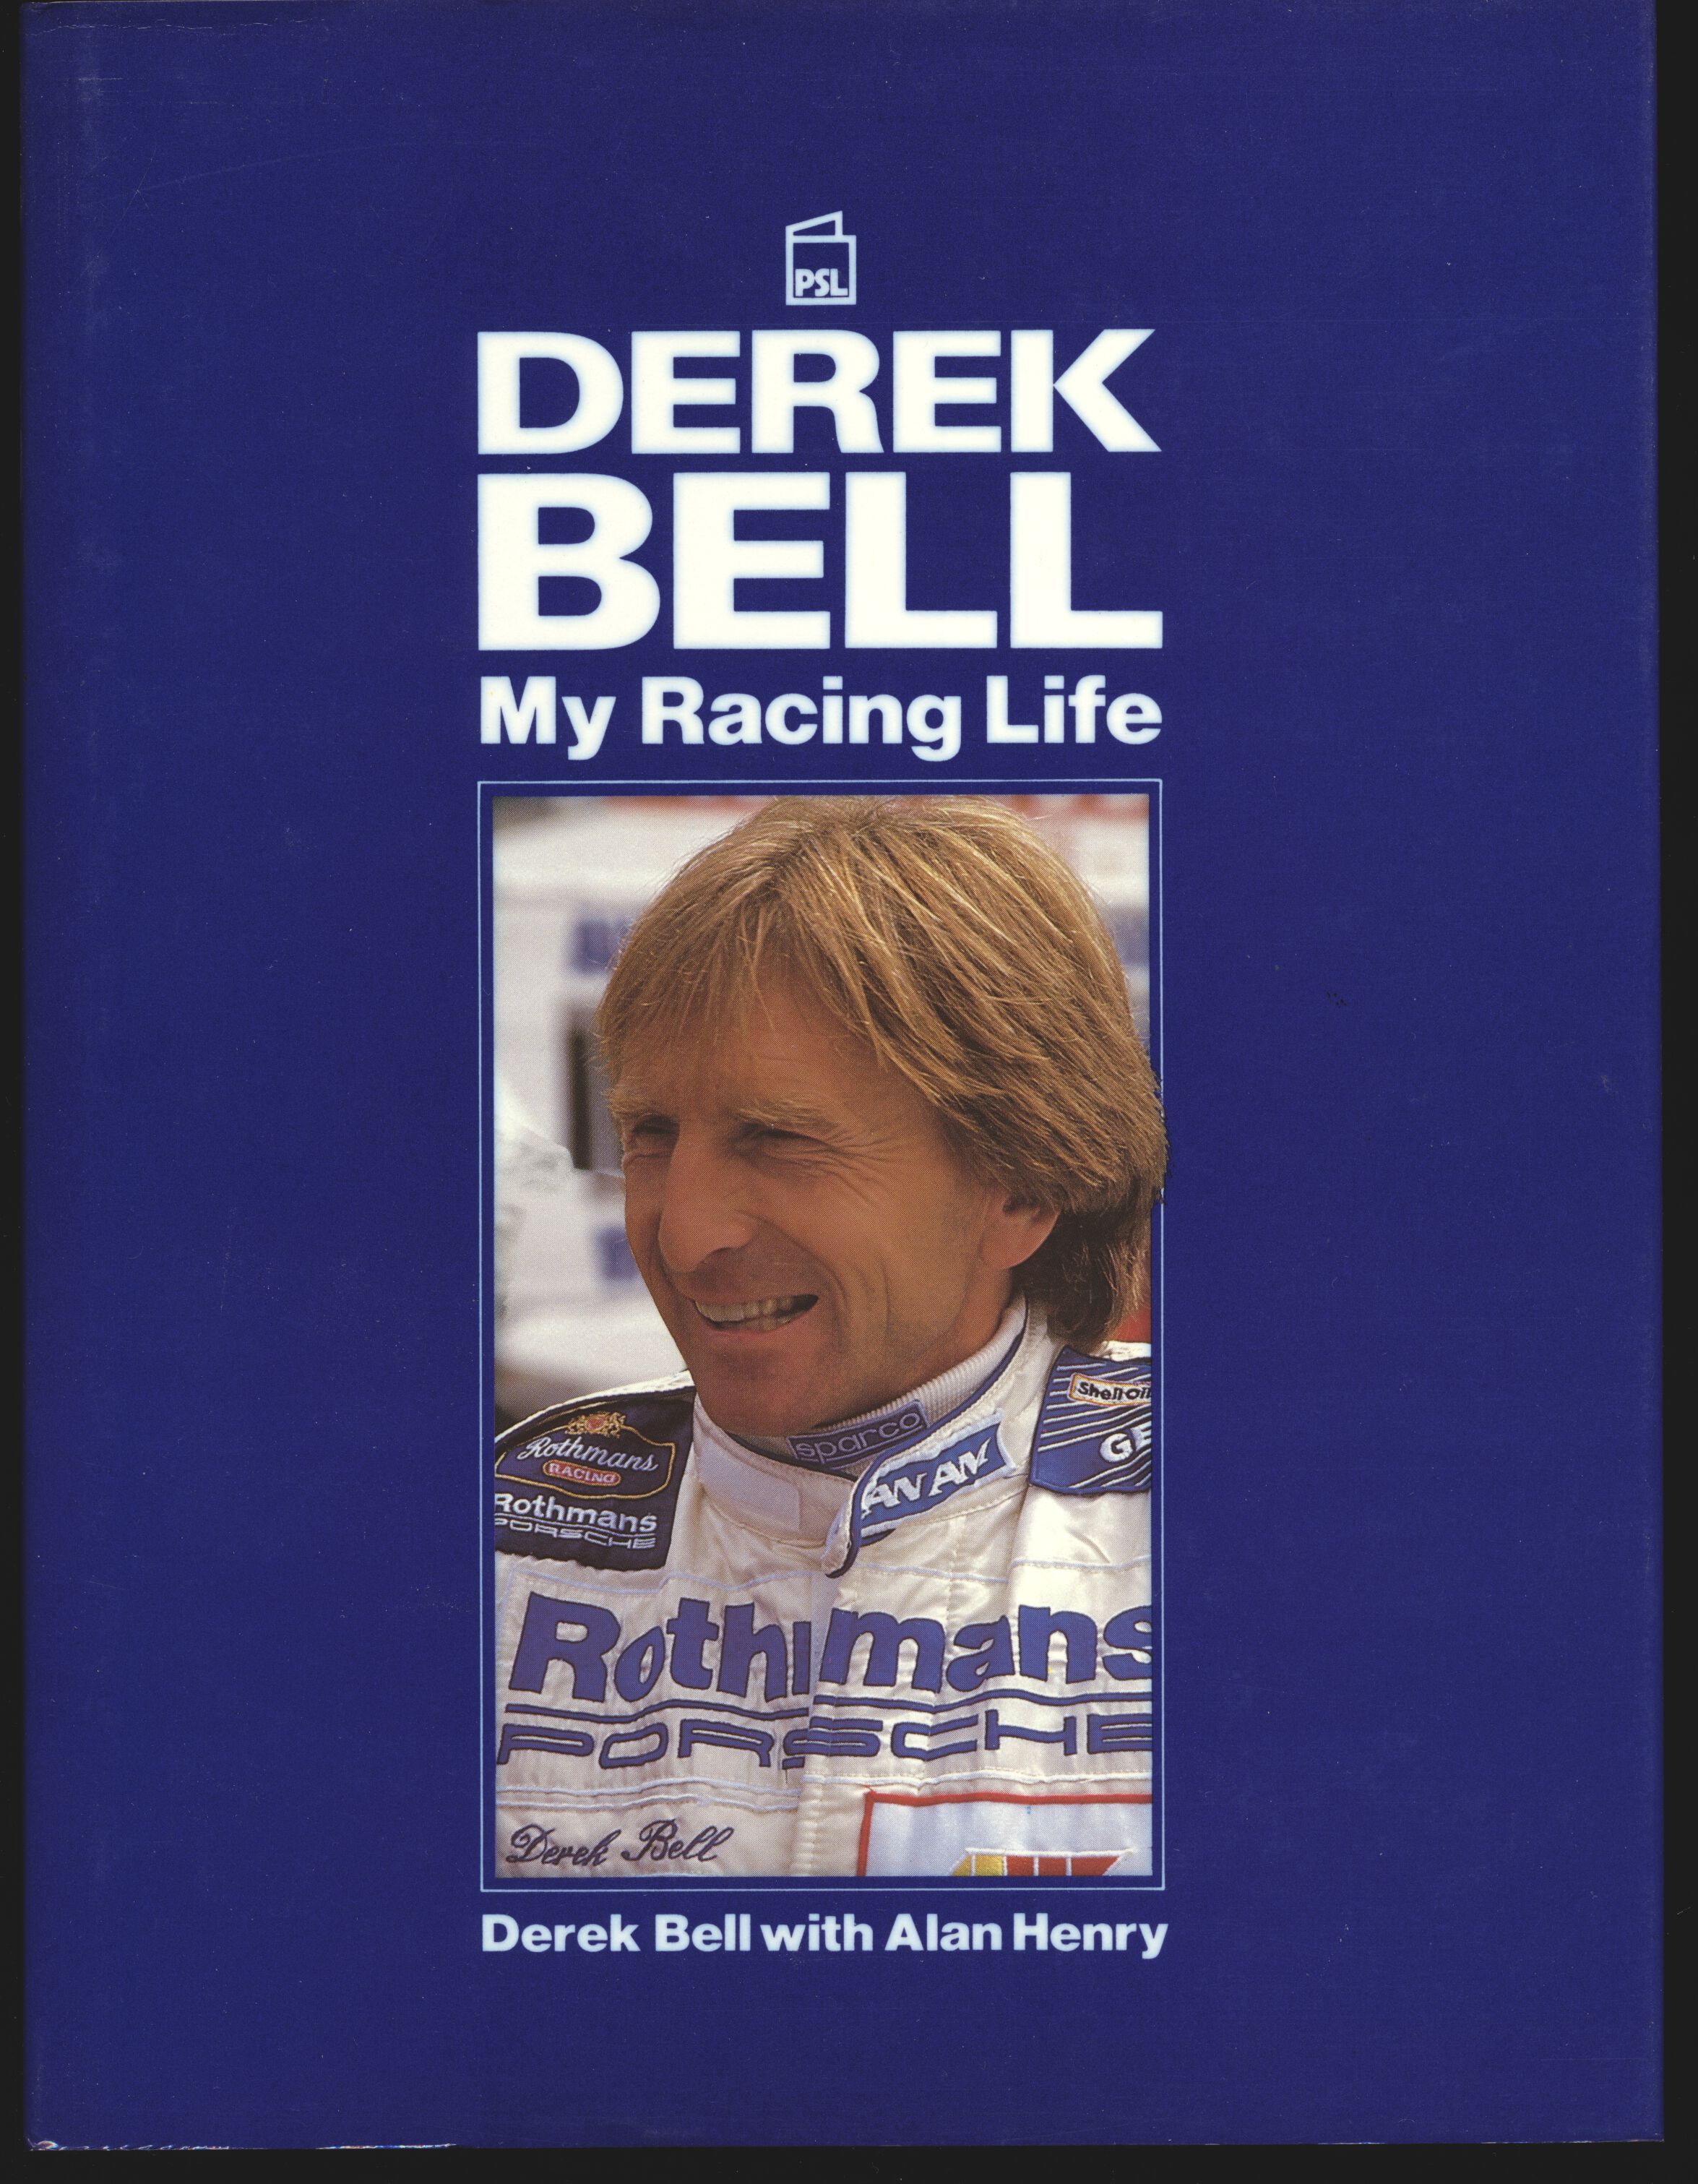 Derek Bell - My Racing Life - Derek Bell and Alan Henry